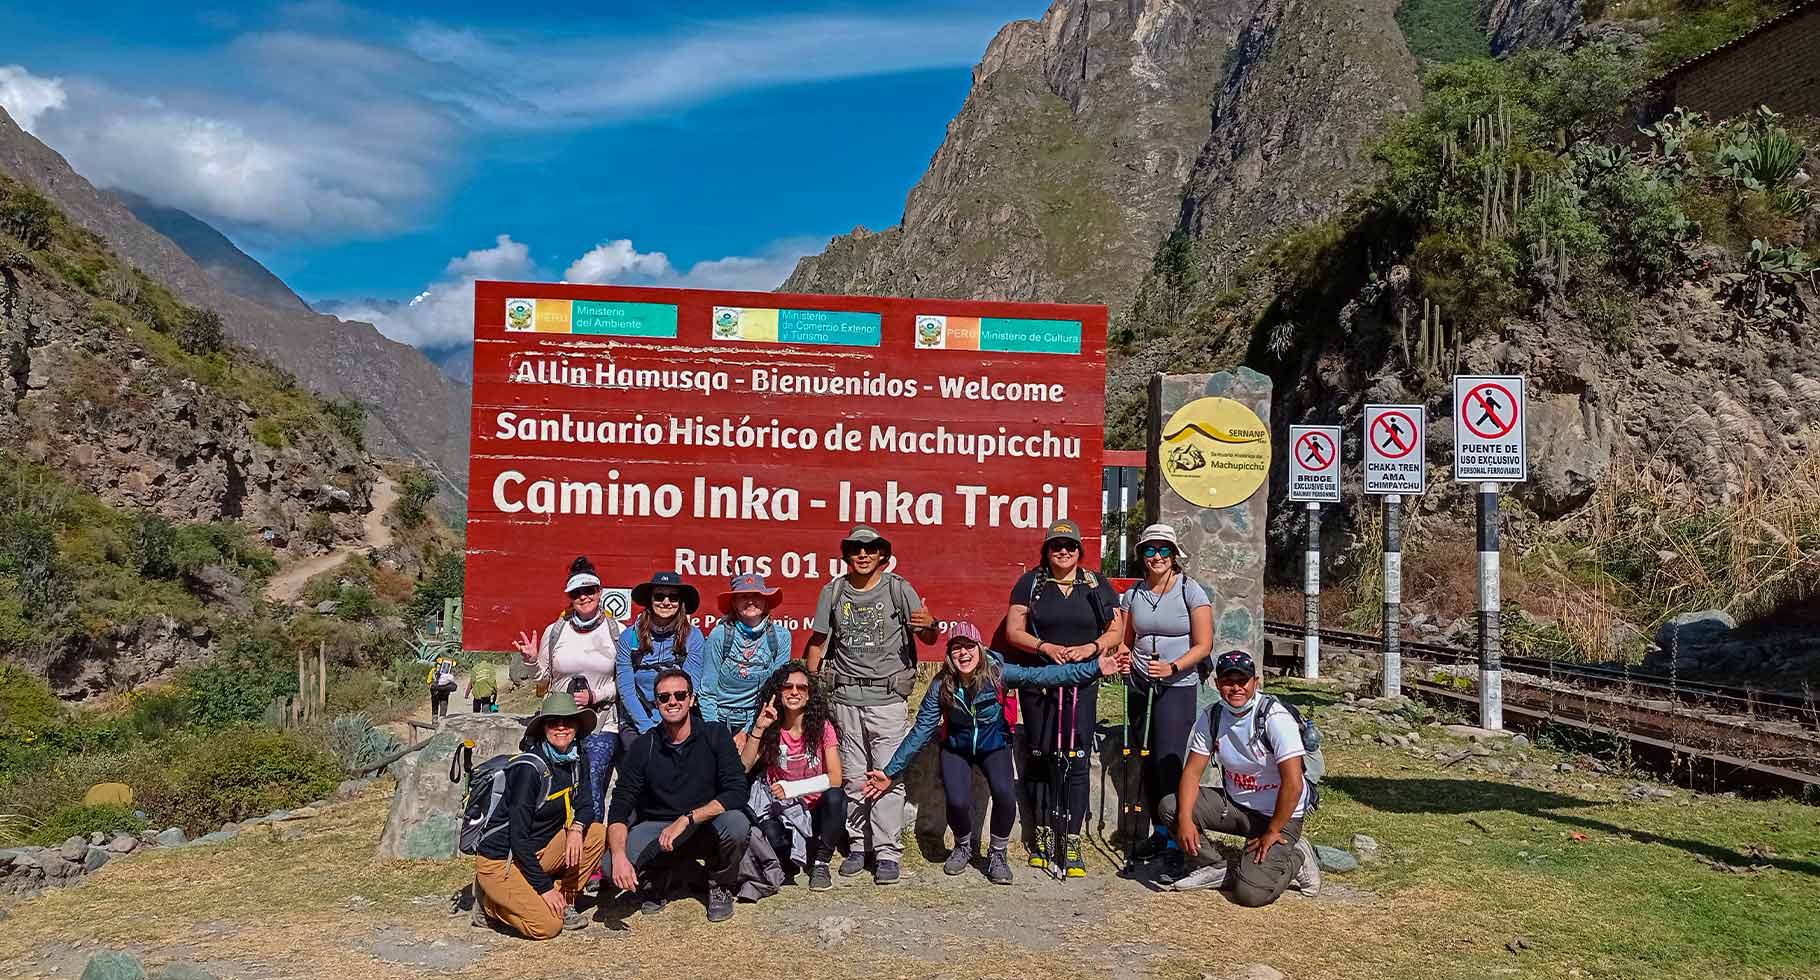 Classic Inca trail to Machu Picchu 4 days - Start point